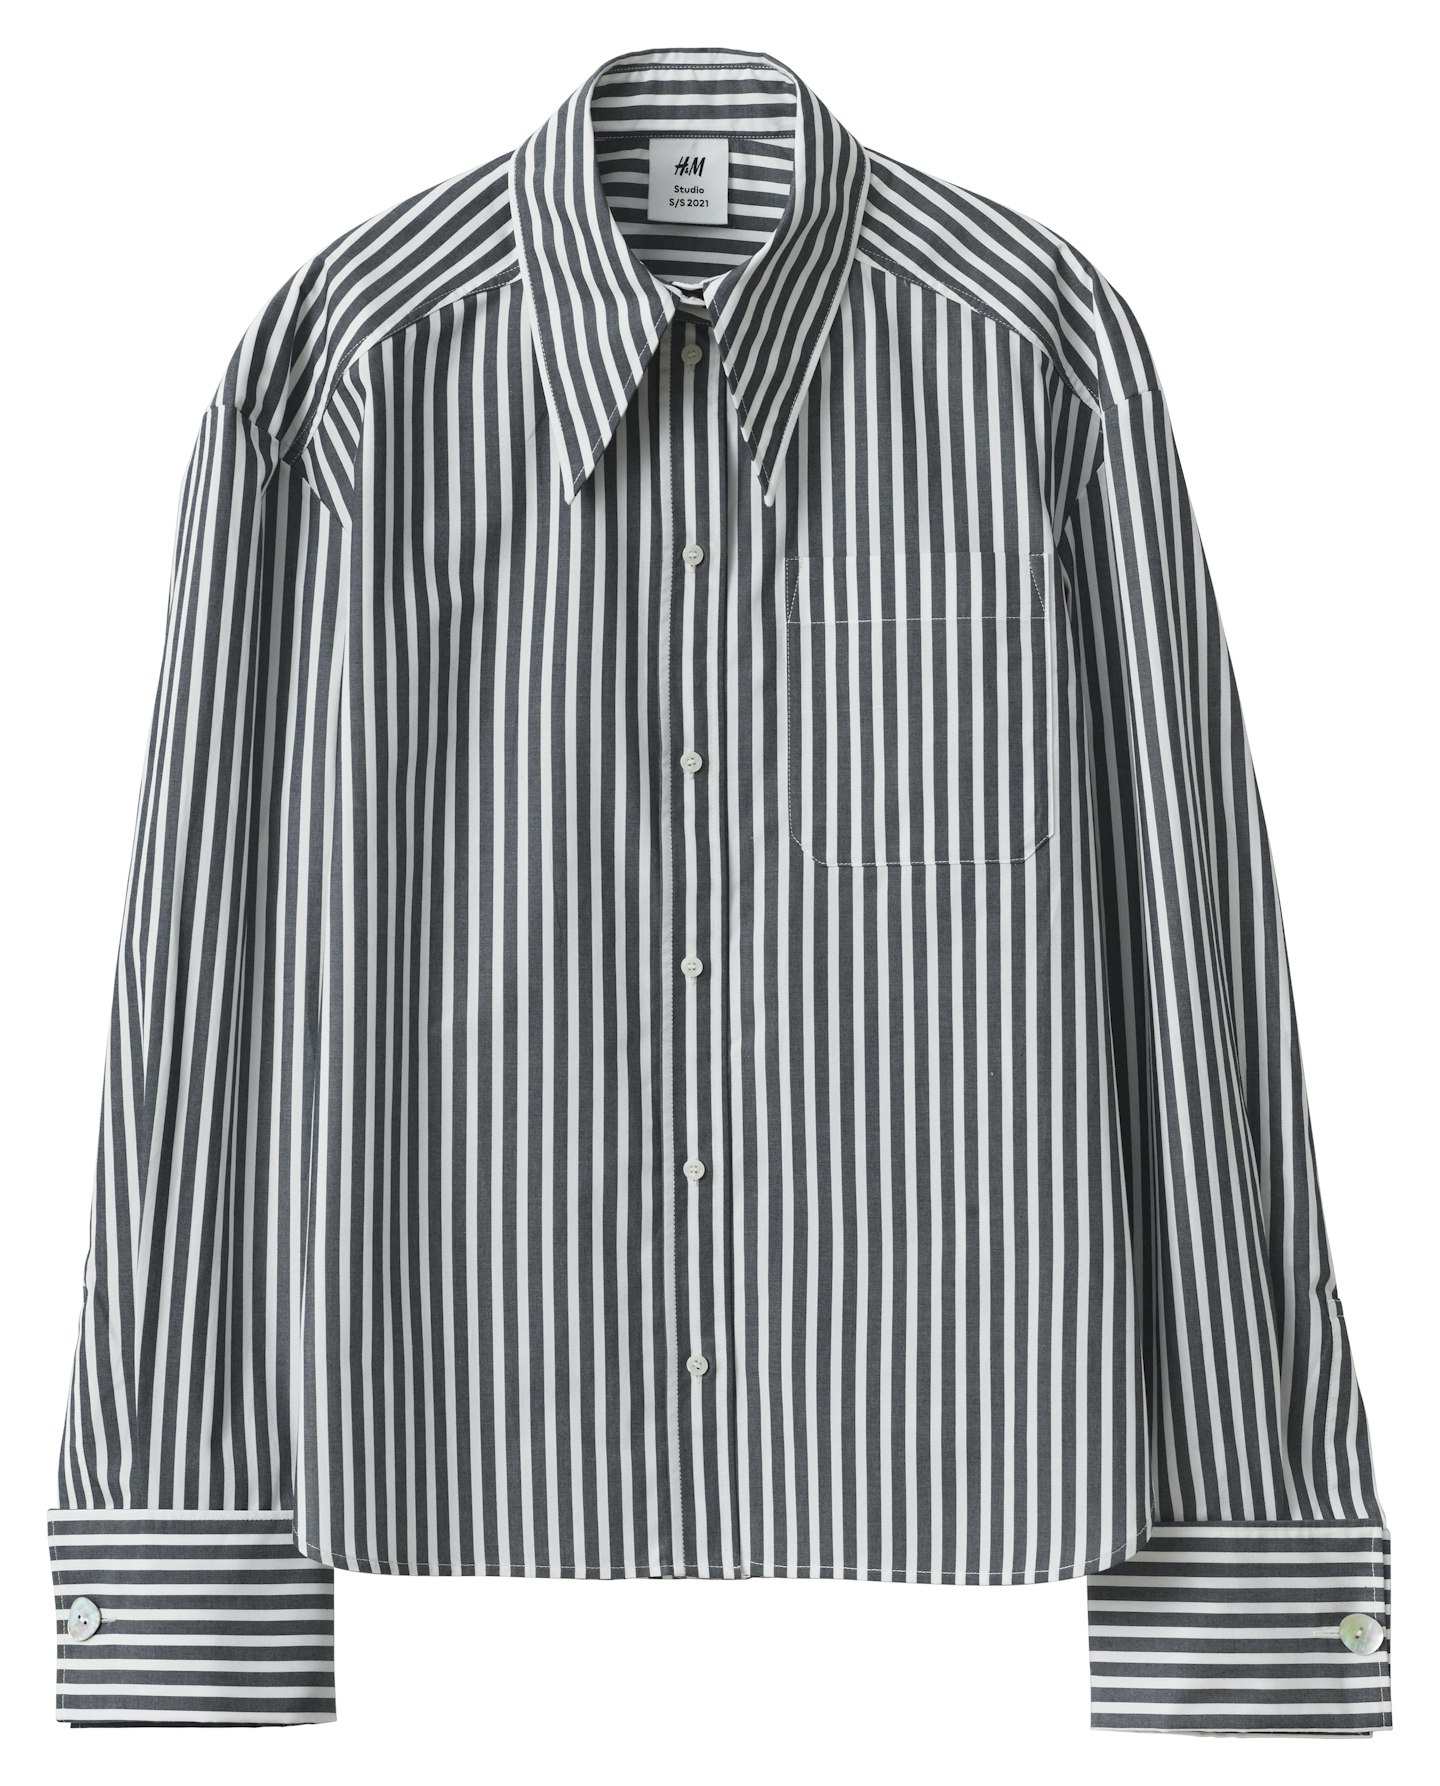 Striped Shirt, £49.99